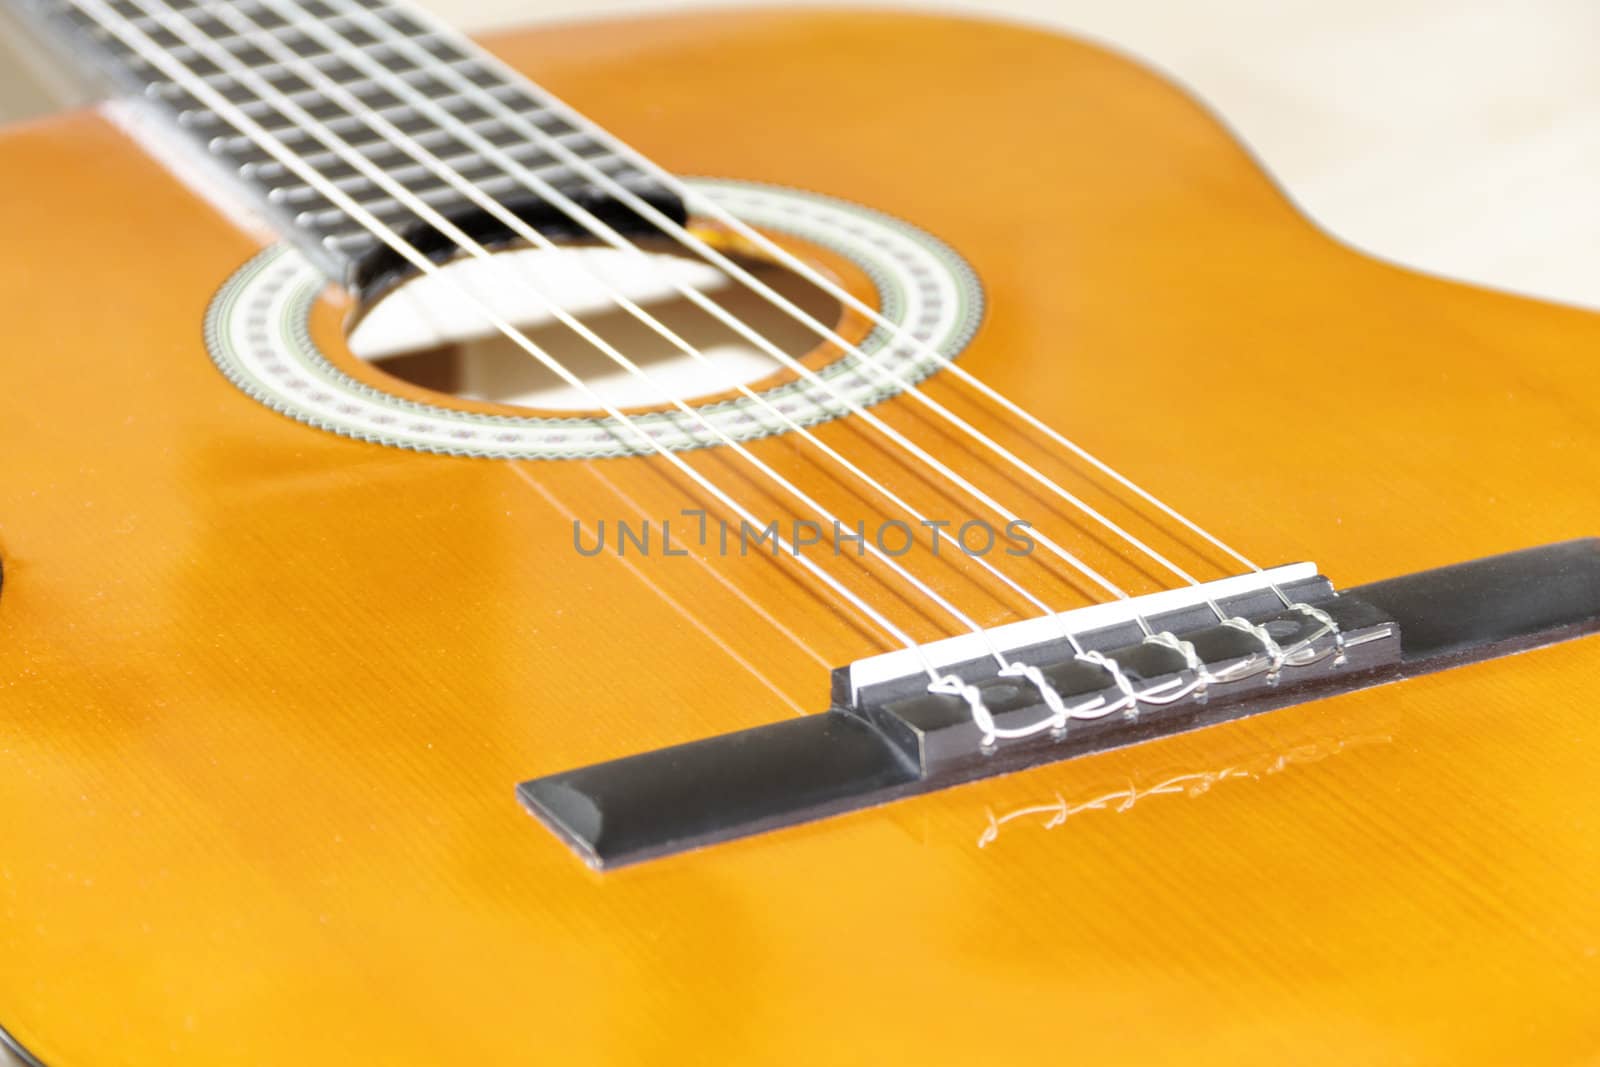 6 string classical guitar 